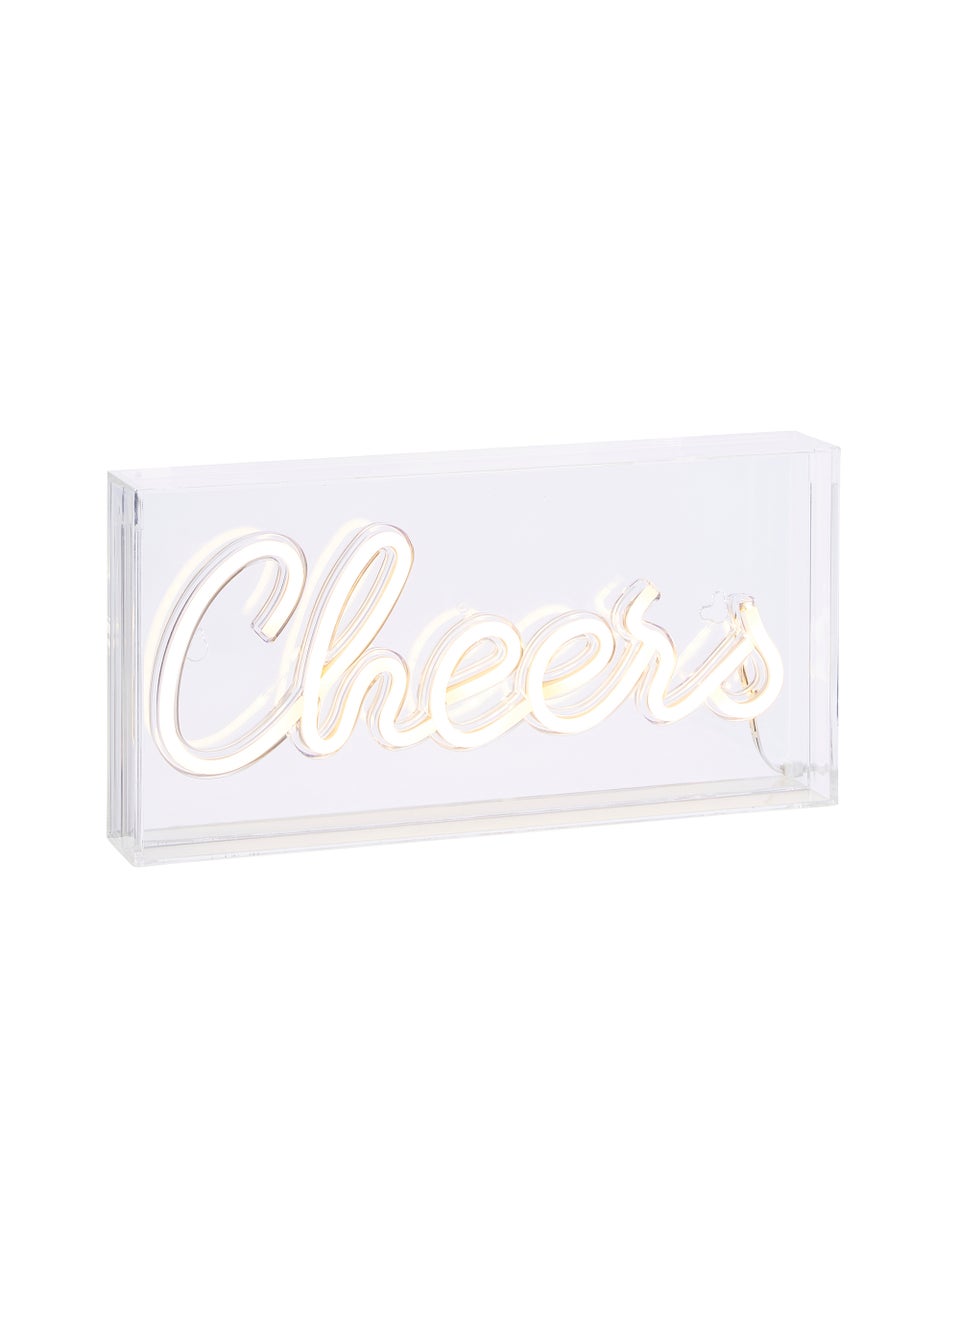 Glow Cheers Acrylic Light Box (15cm x 30cm x 4.6cm)